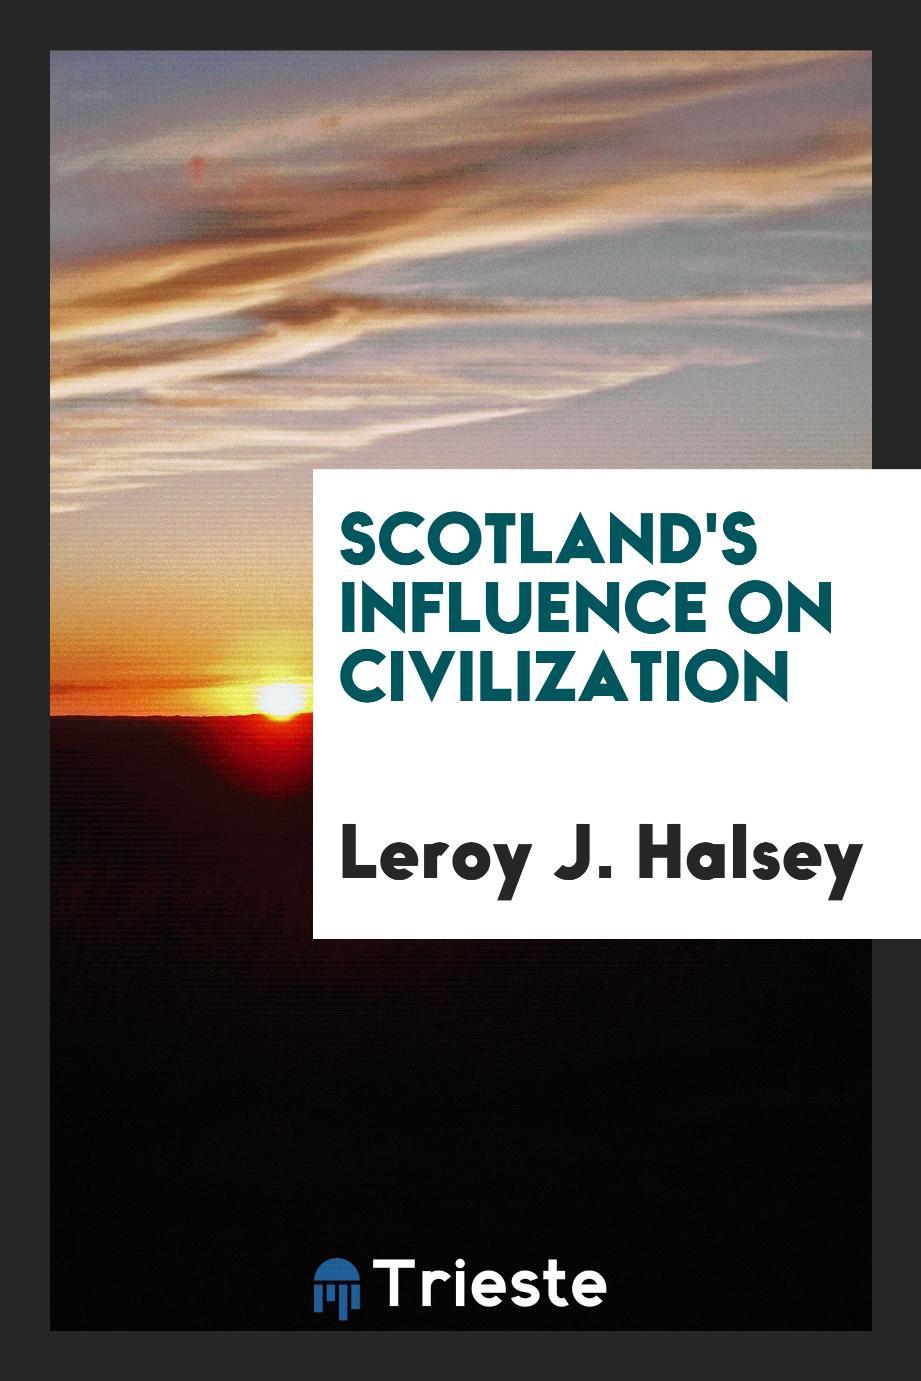 Scotland's influence on civilization